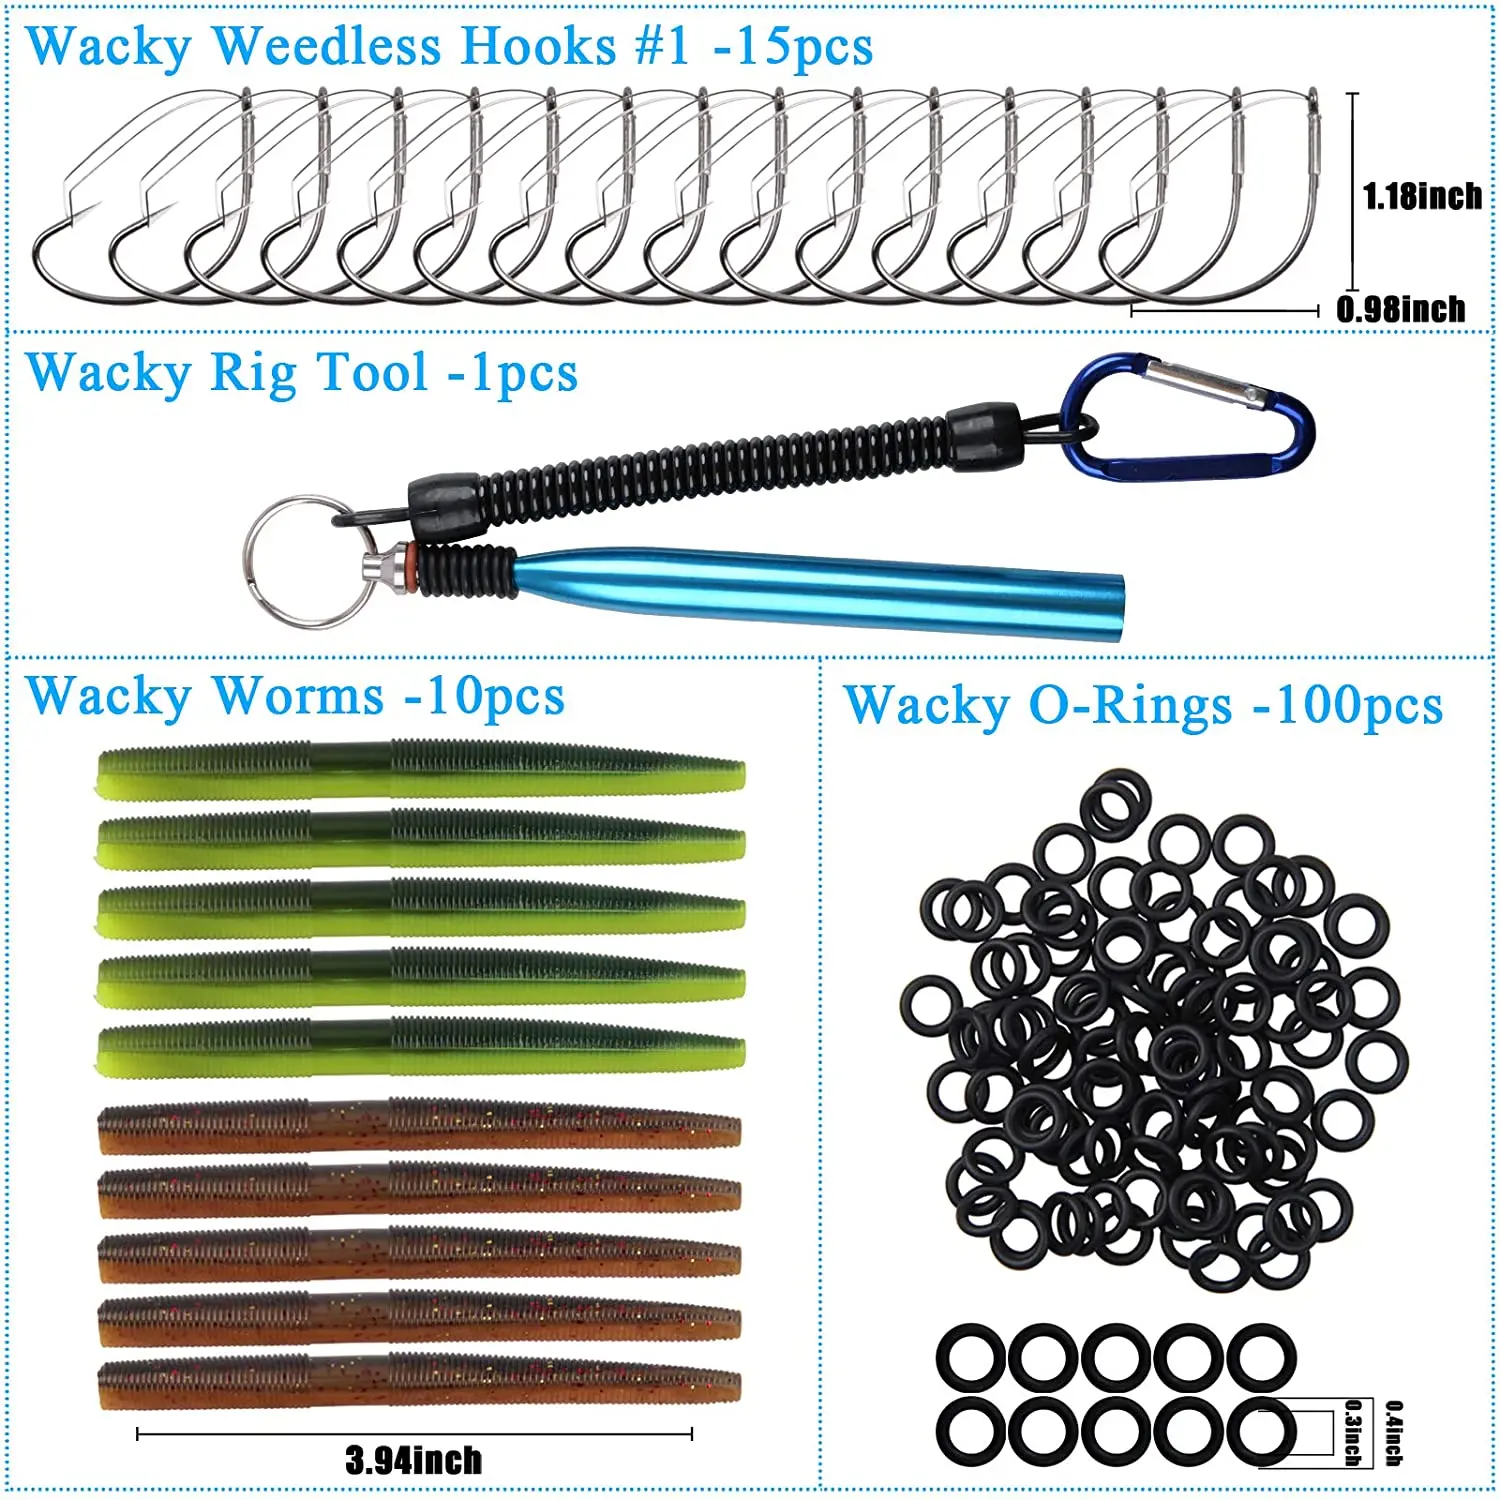 126pcs/Box Wcky Rig Worm Hooks Fishing Tool Kit Wacky Worms Wacky O-Rings Wacky  Rig Tool Wacky Weedless Hooks Bait Fishing - AliExpress